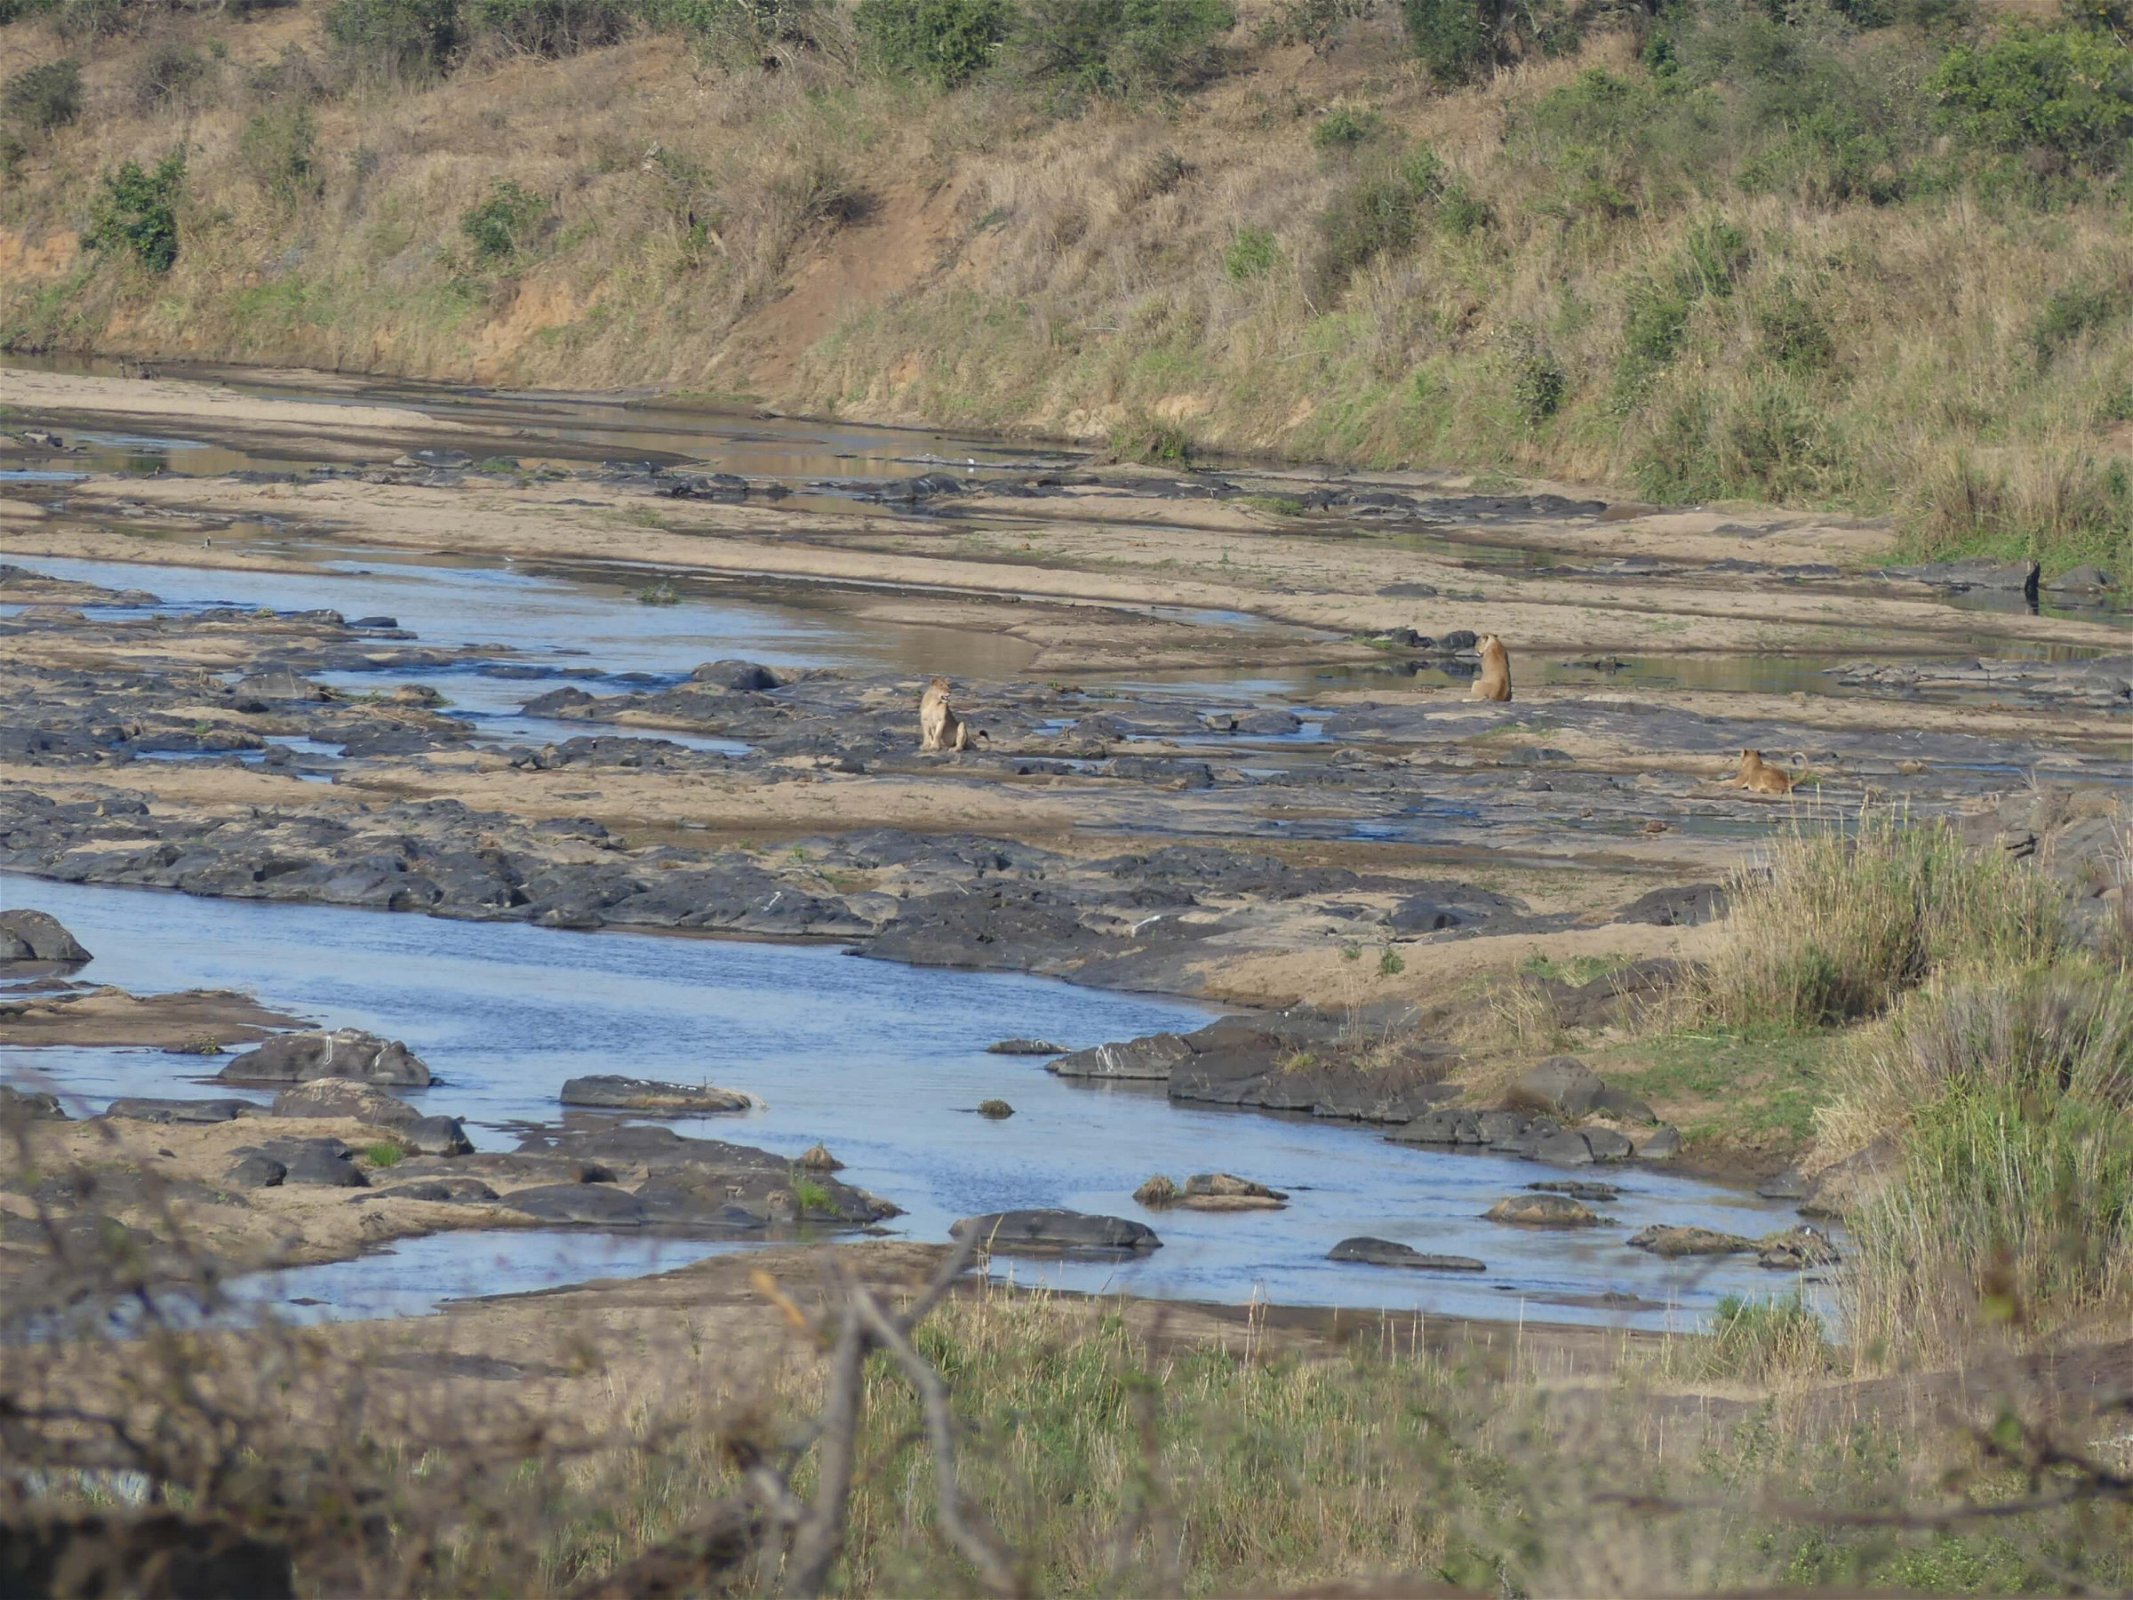 zuid-afrika-wandelsafari-in-het-krugerpark-leeuwen-spotten